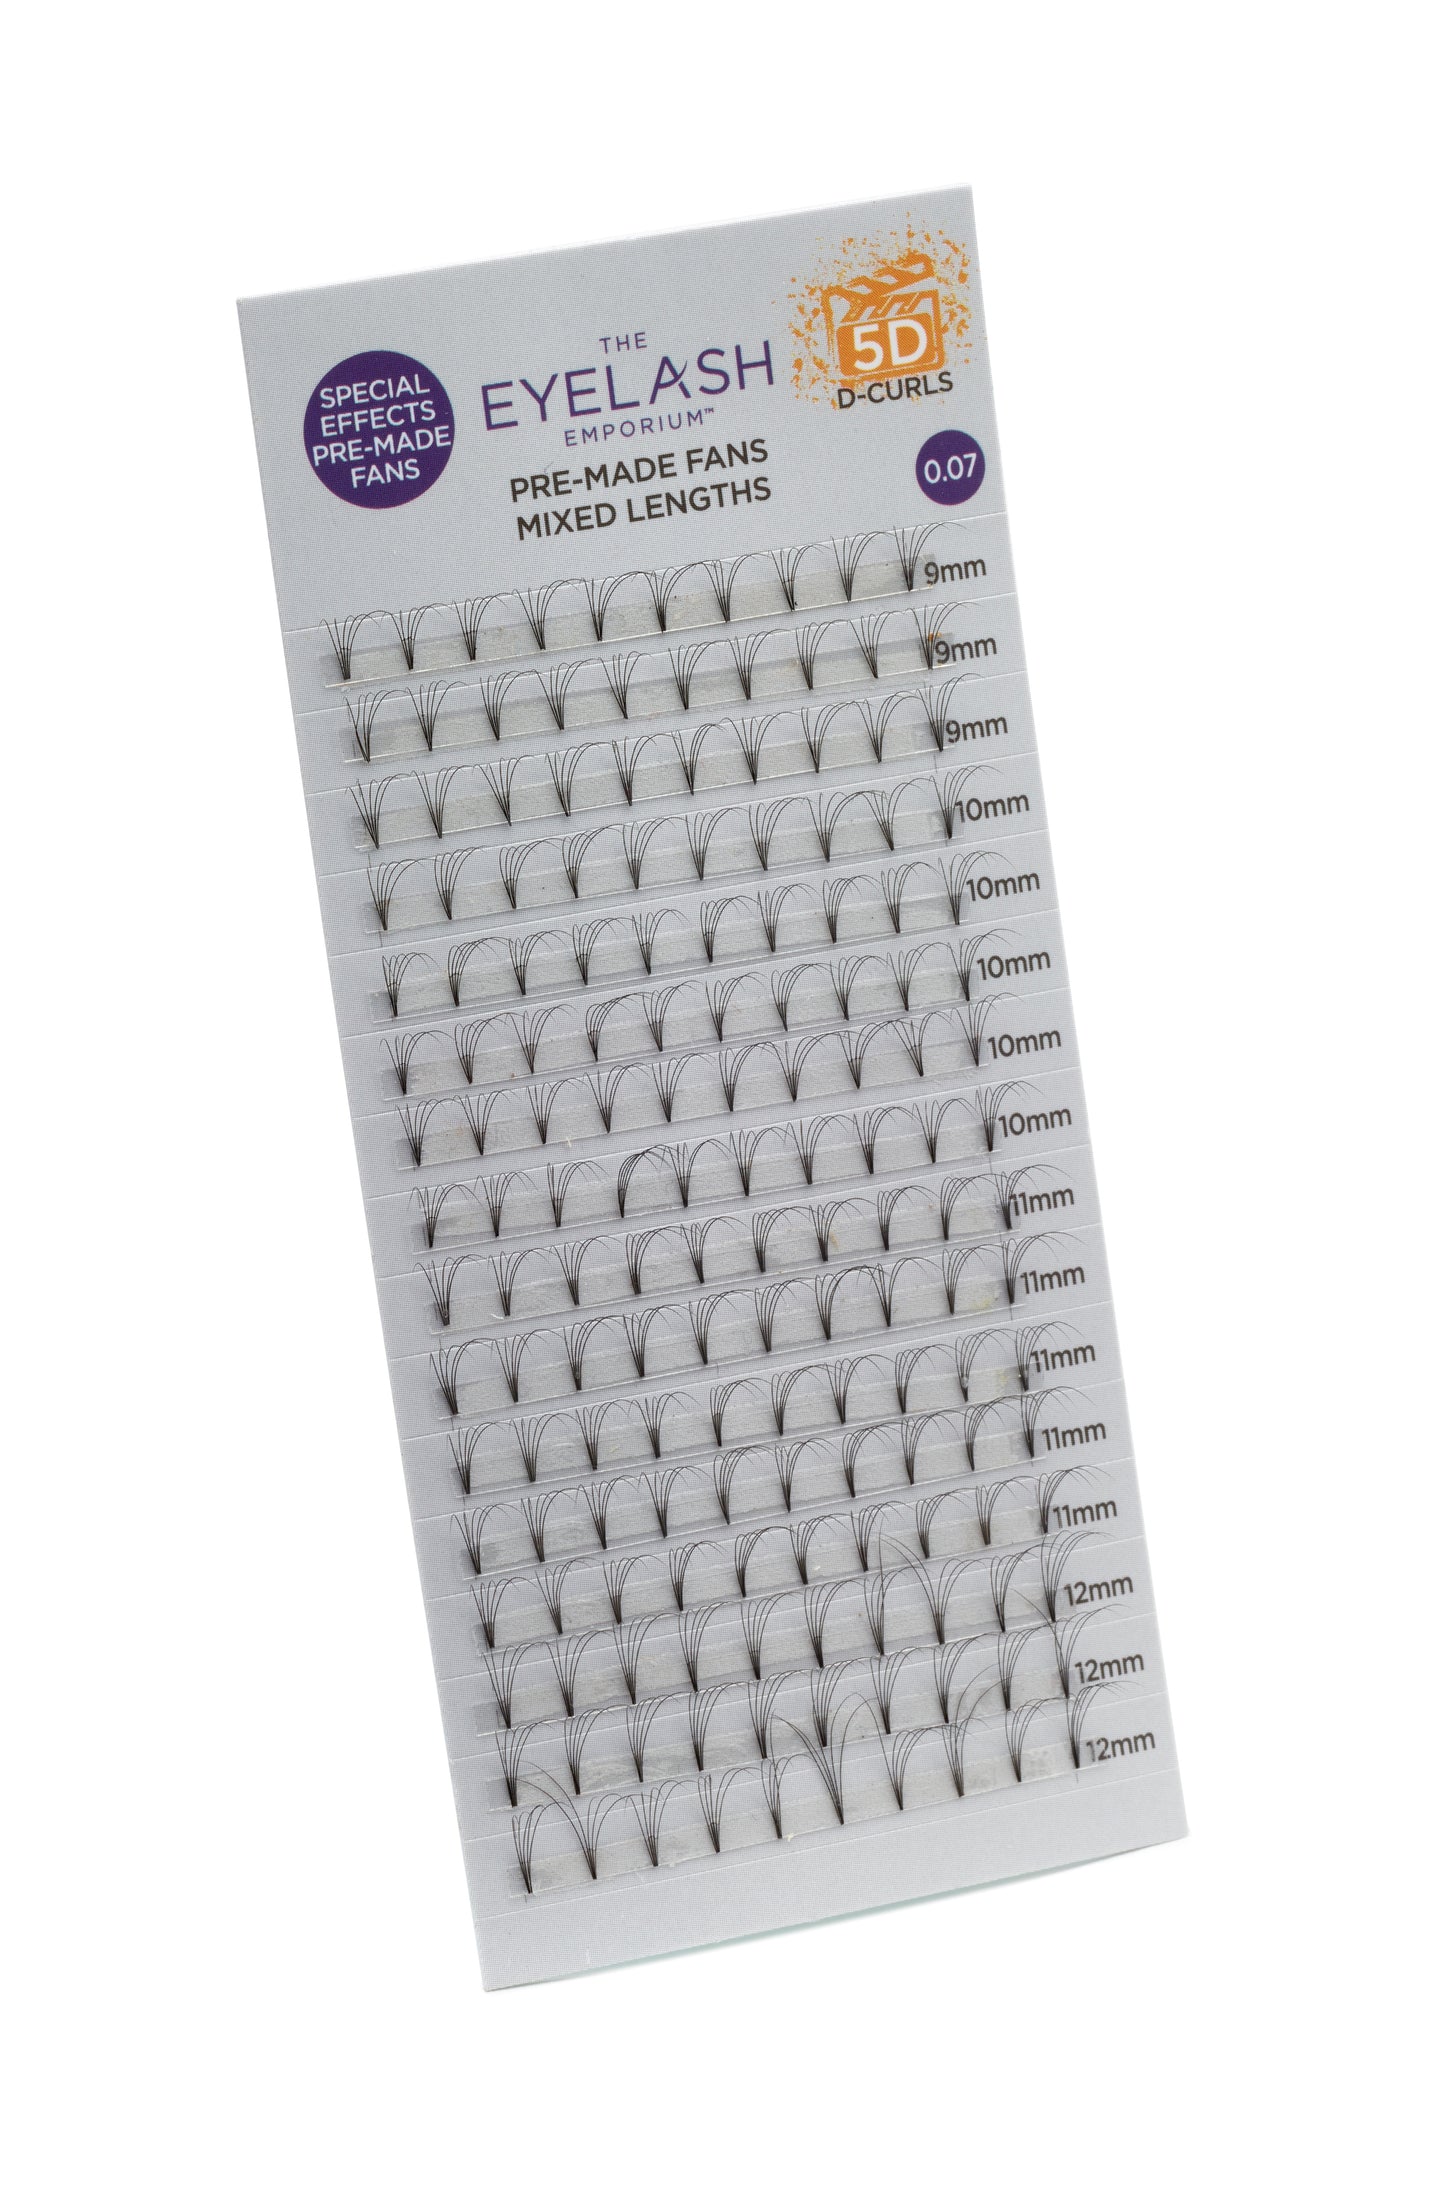 The Eyelash Emporium DCurl premade fan lashes